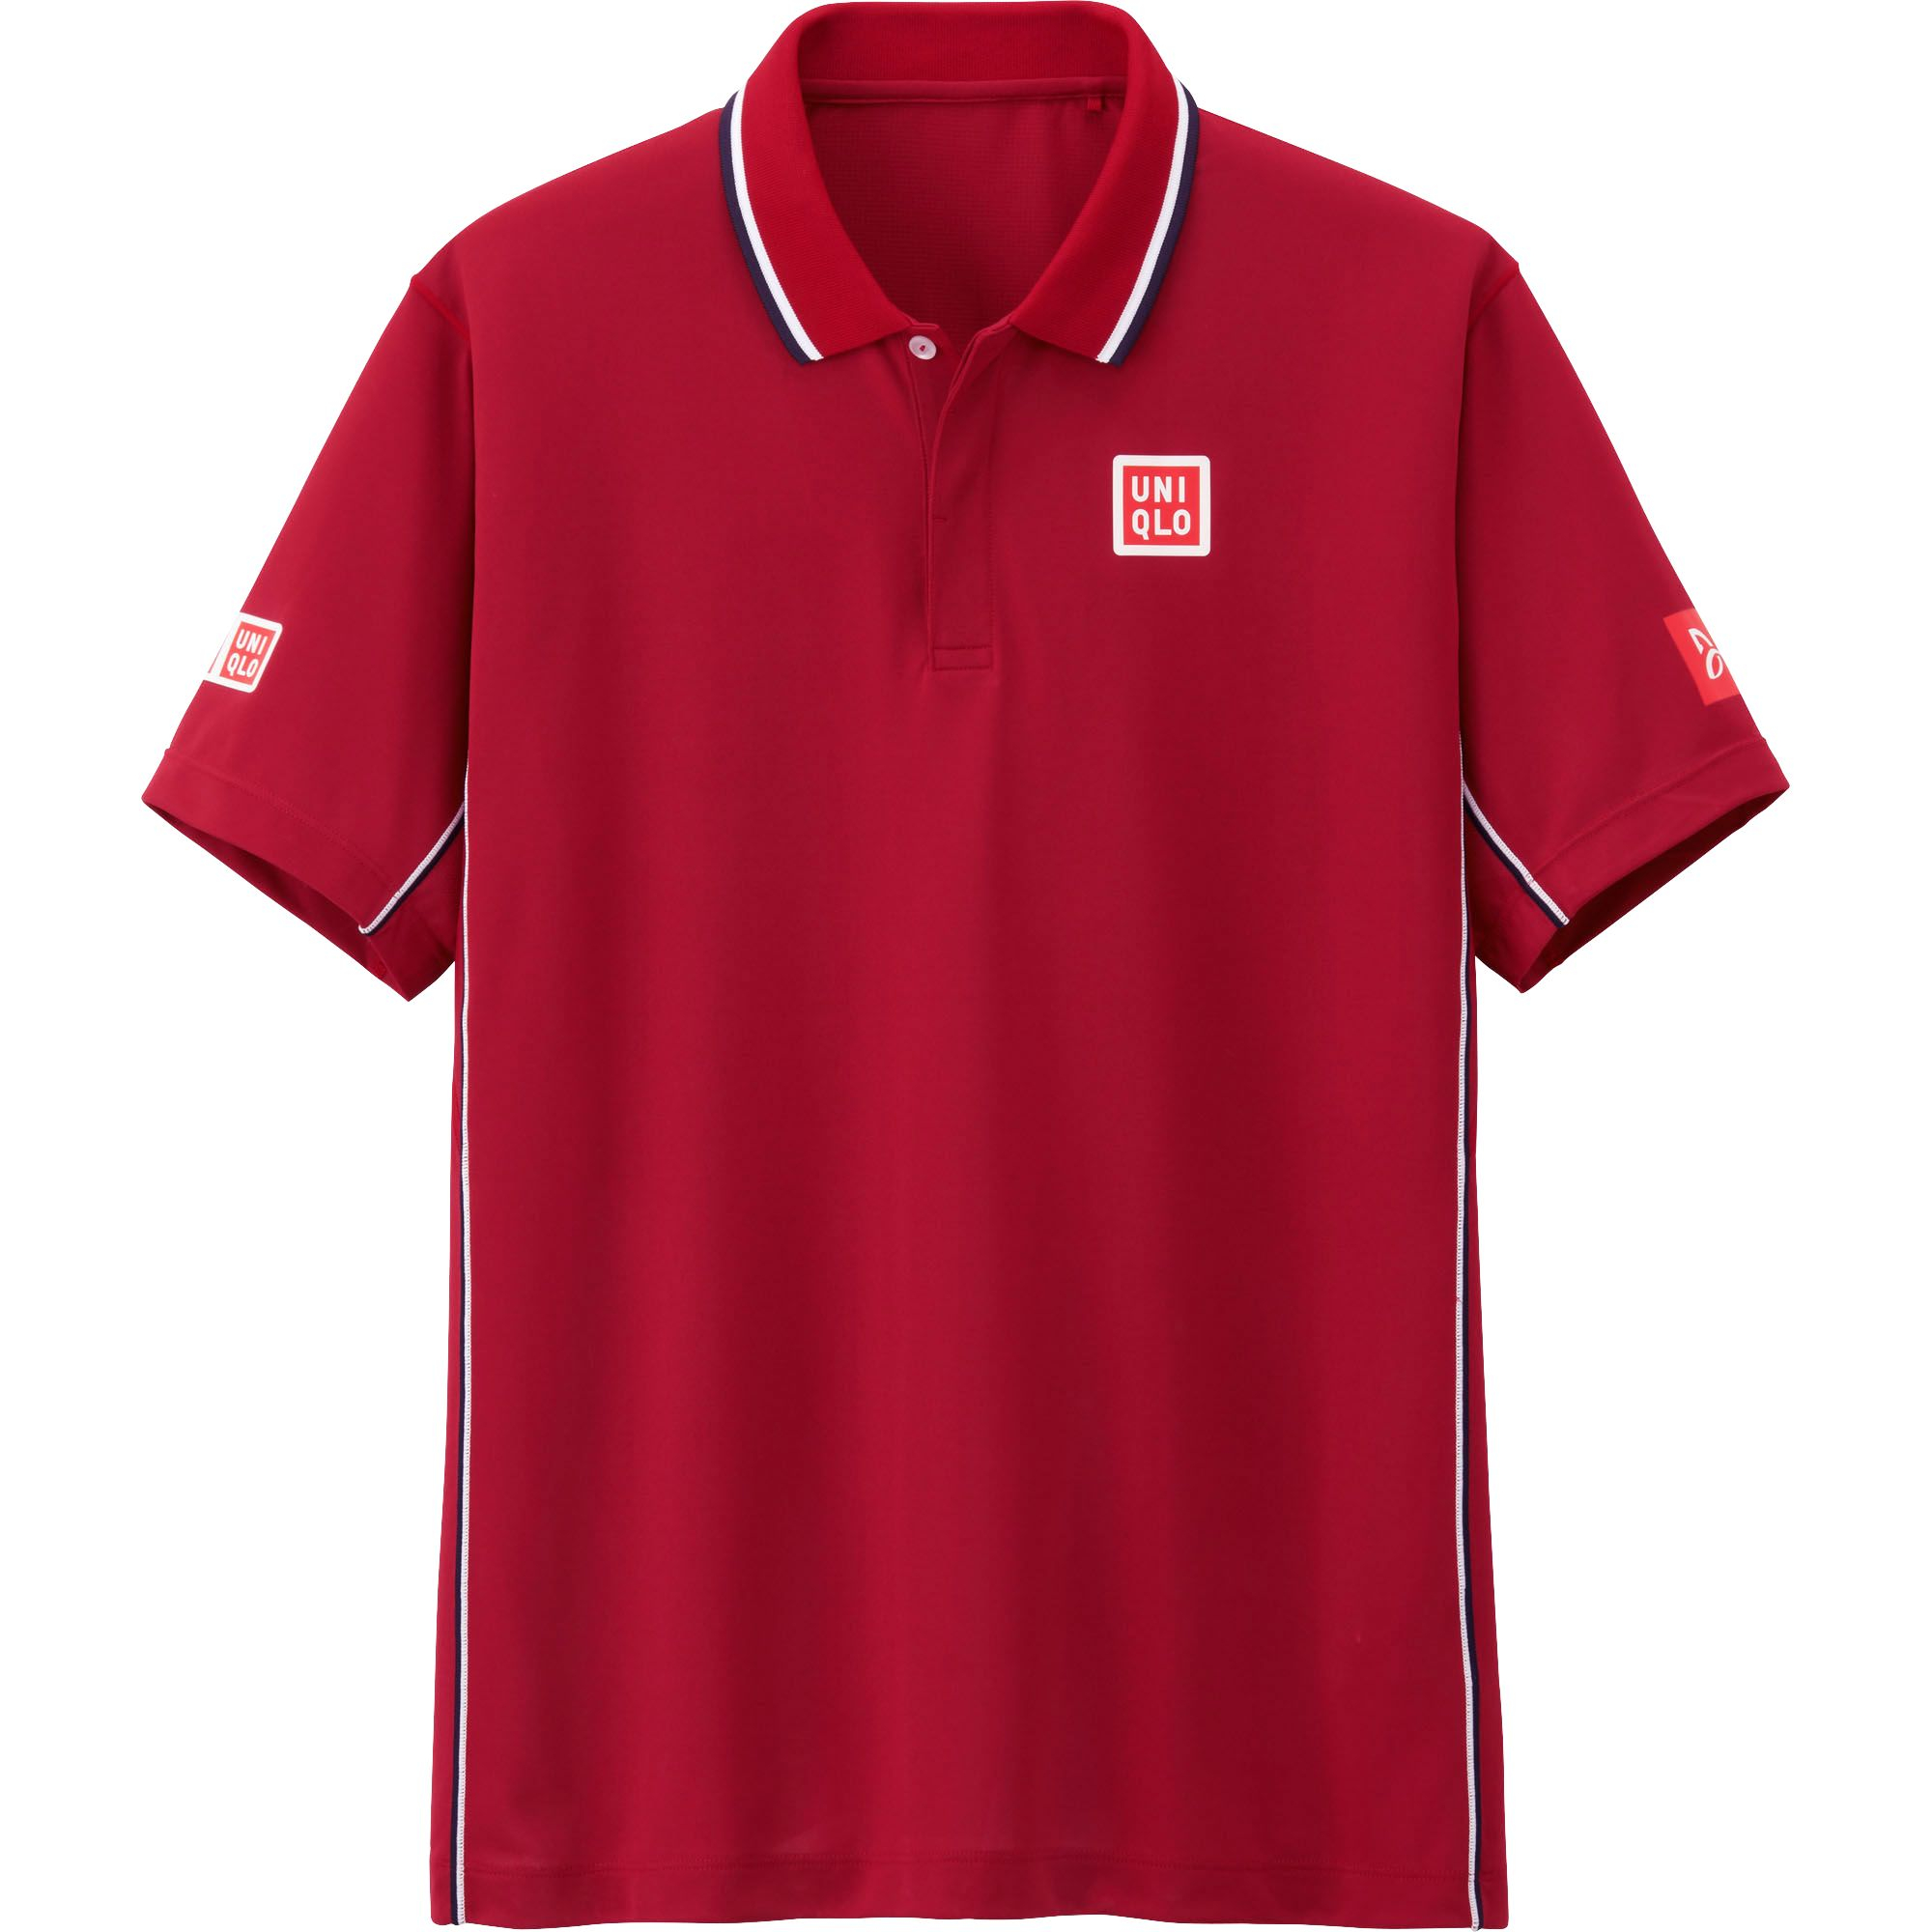 Uniqlo Novak Djokovic Dry Ex Short Sleeve Polo